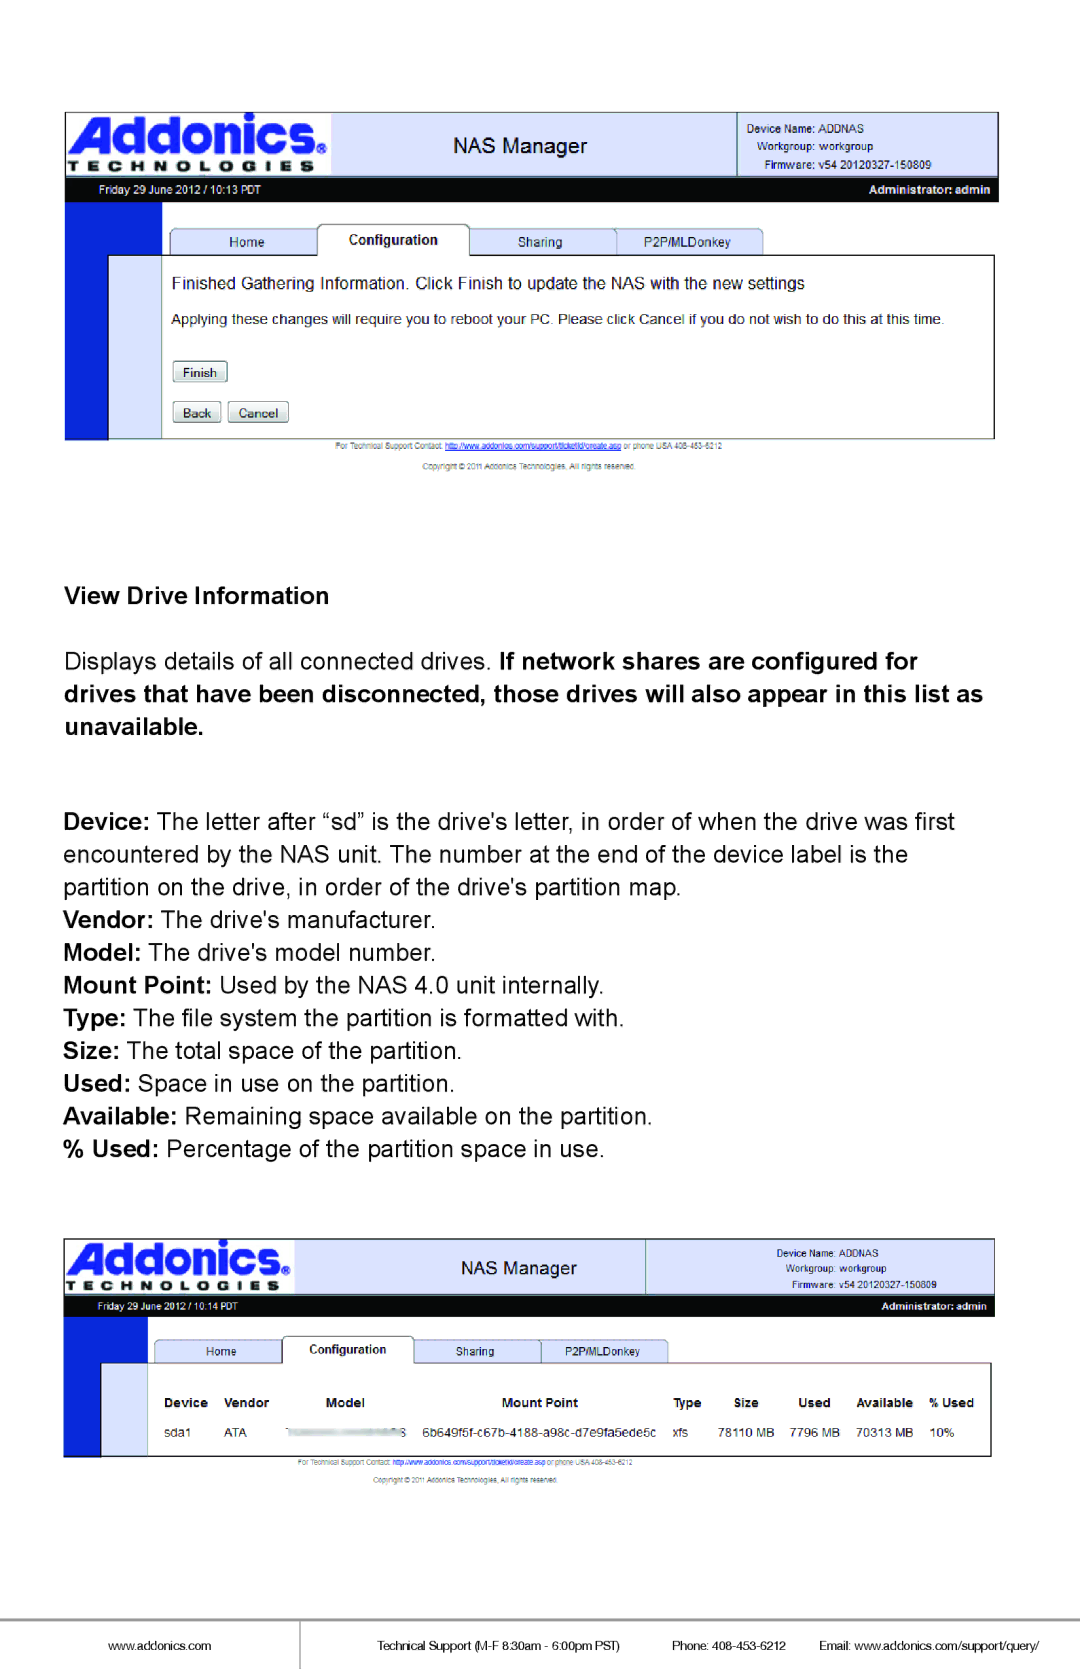 Addonics Technologies NAS40ESU manual View Drive Information 